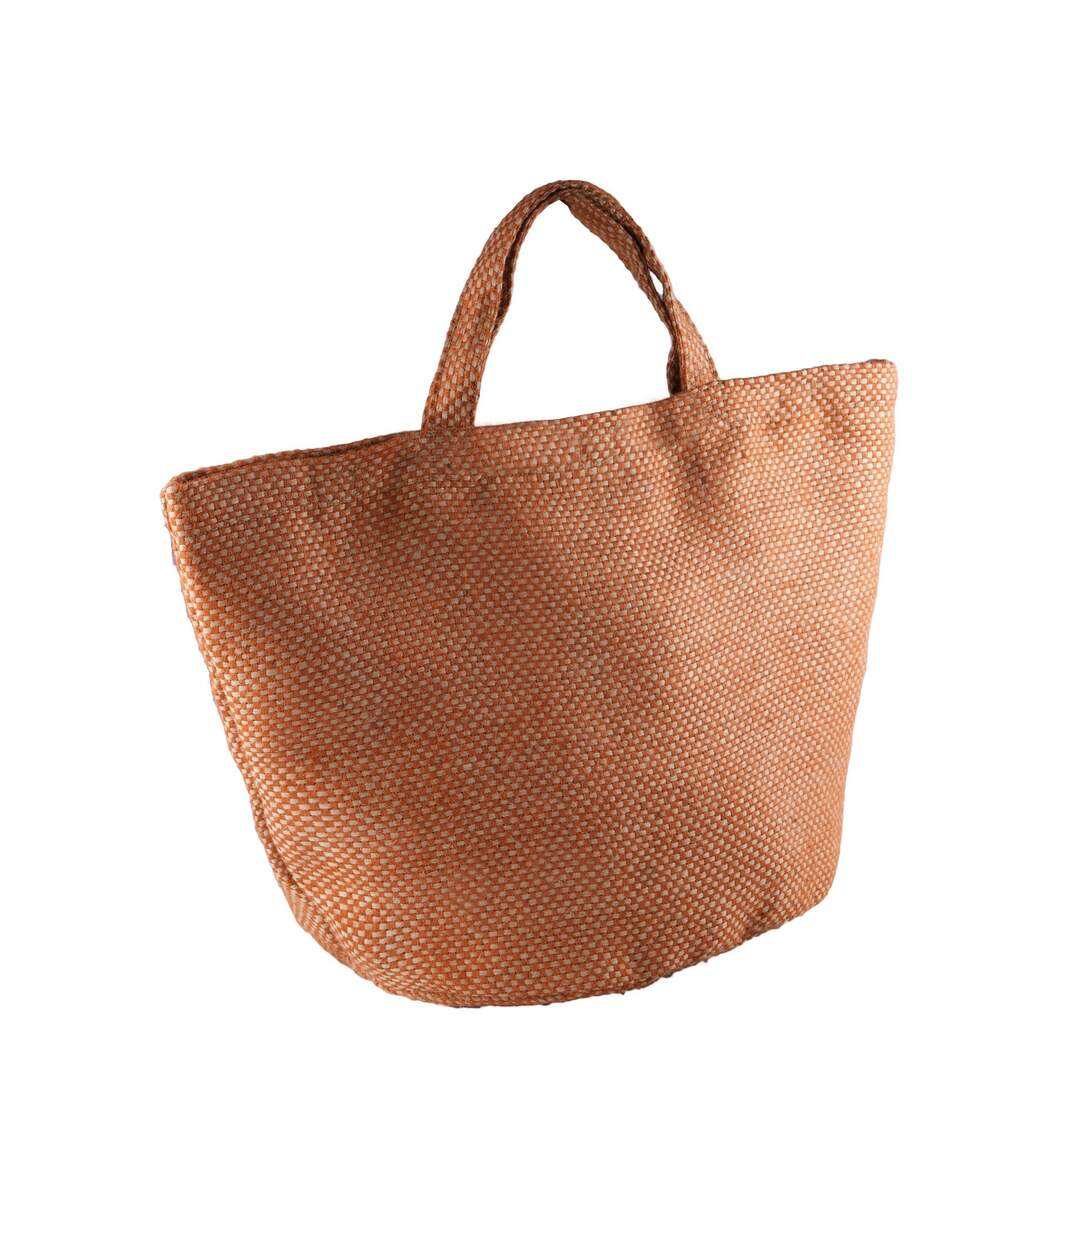 Kimood Womens/Ladies Fashion Jute Bag (Natural/Saffron) (One Size)